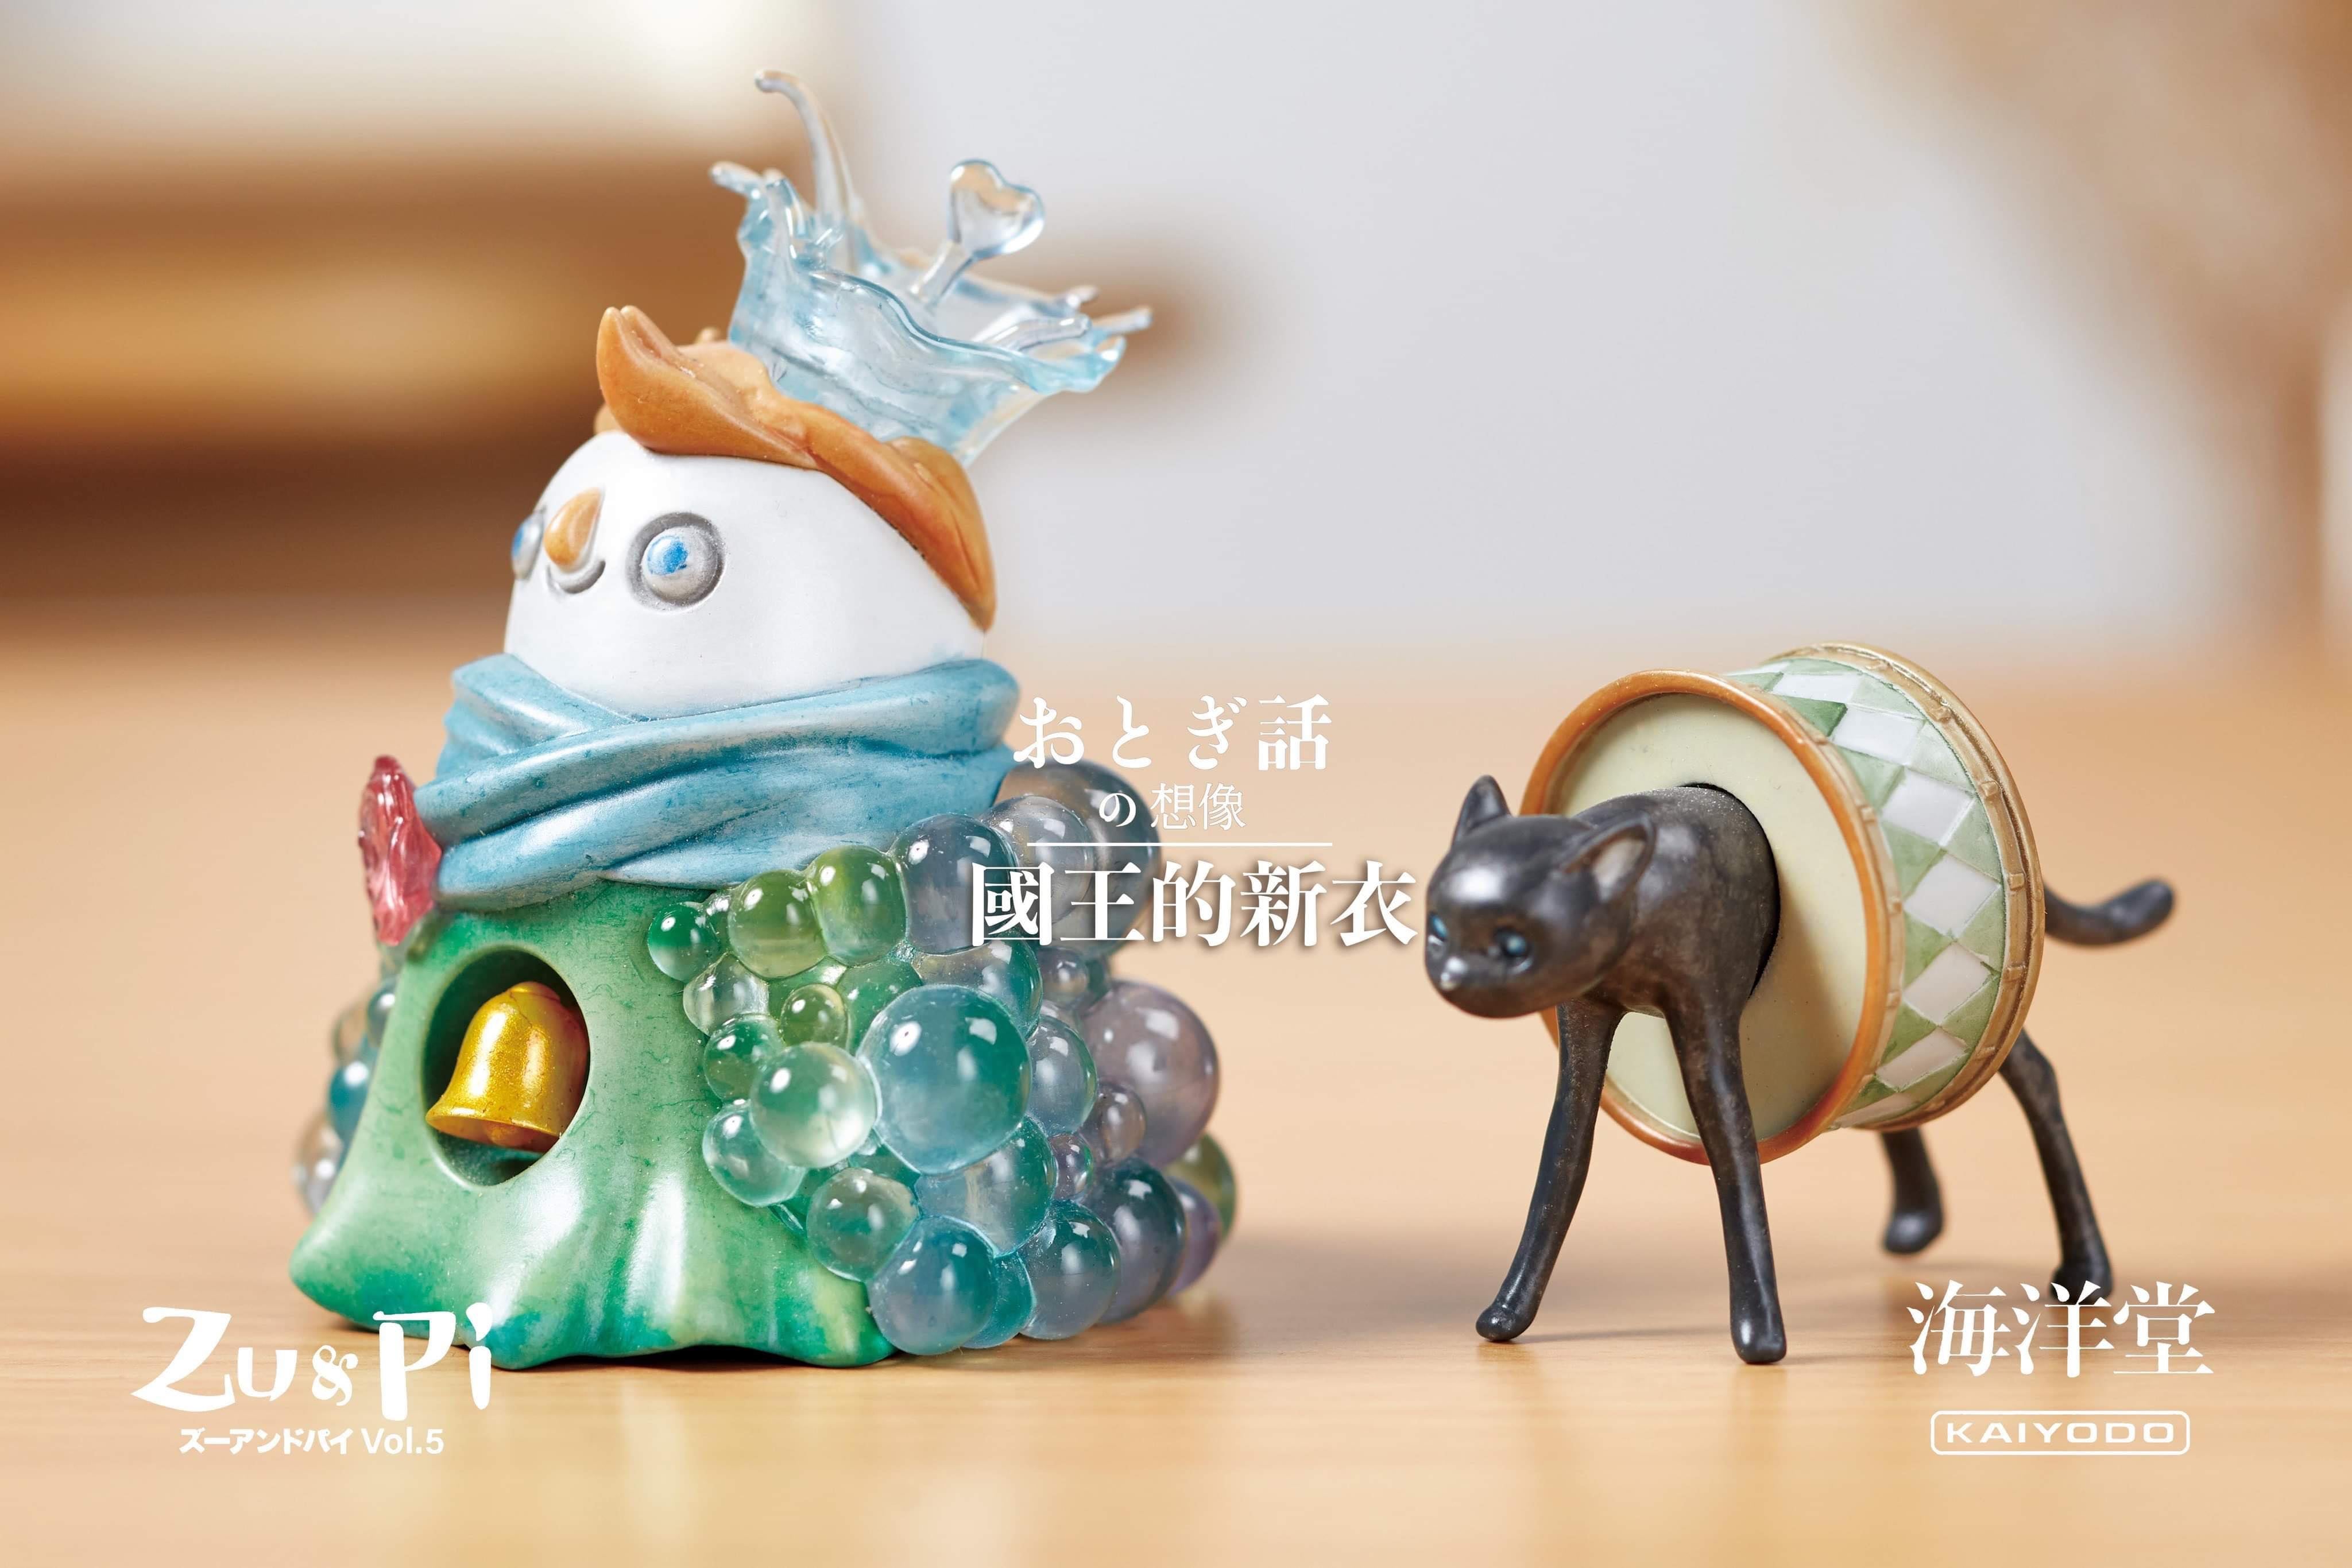 Disney Princess Art Gallery Blind Box Series – Strangecat Toys